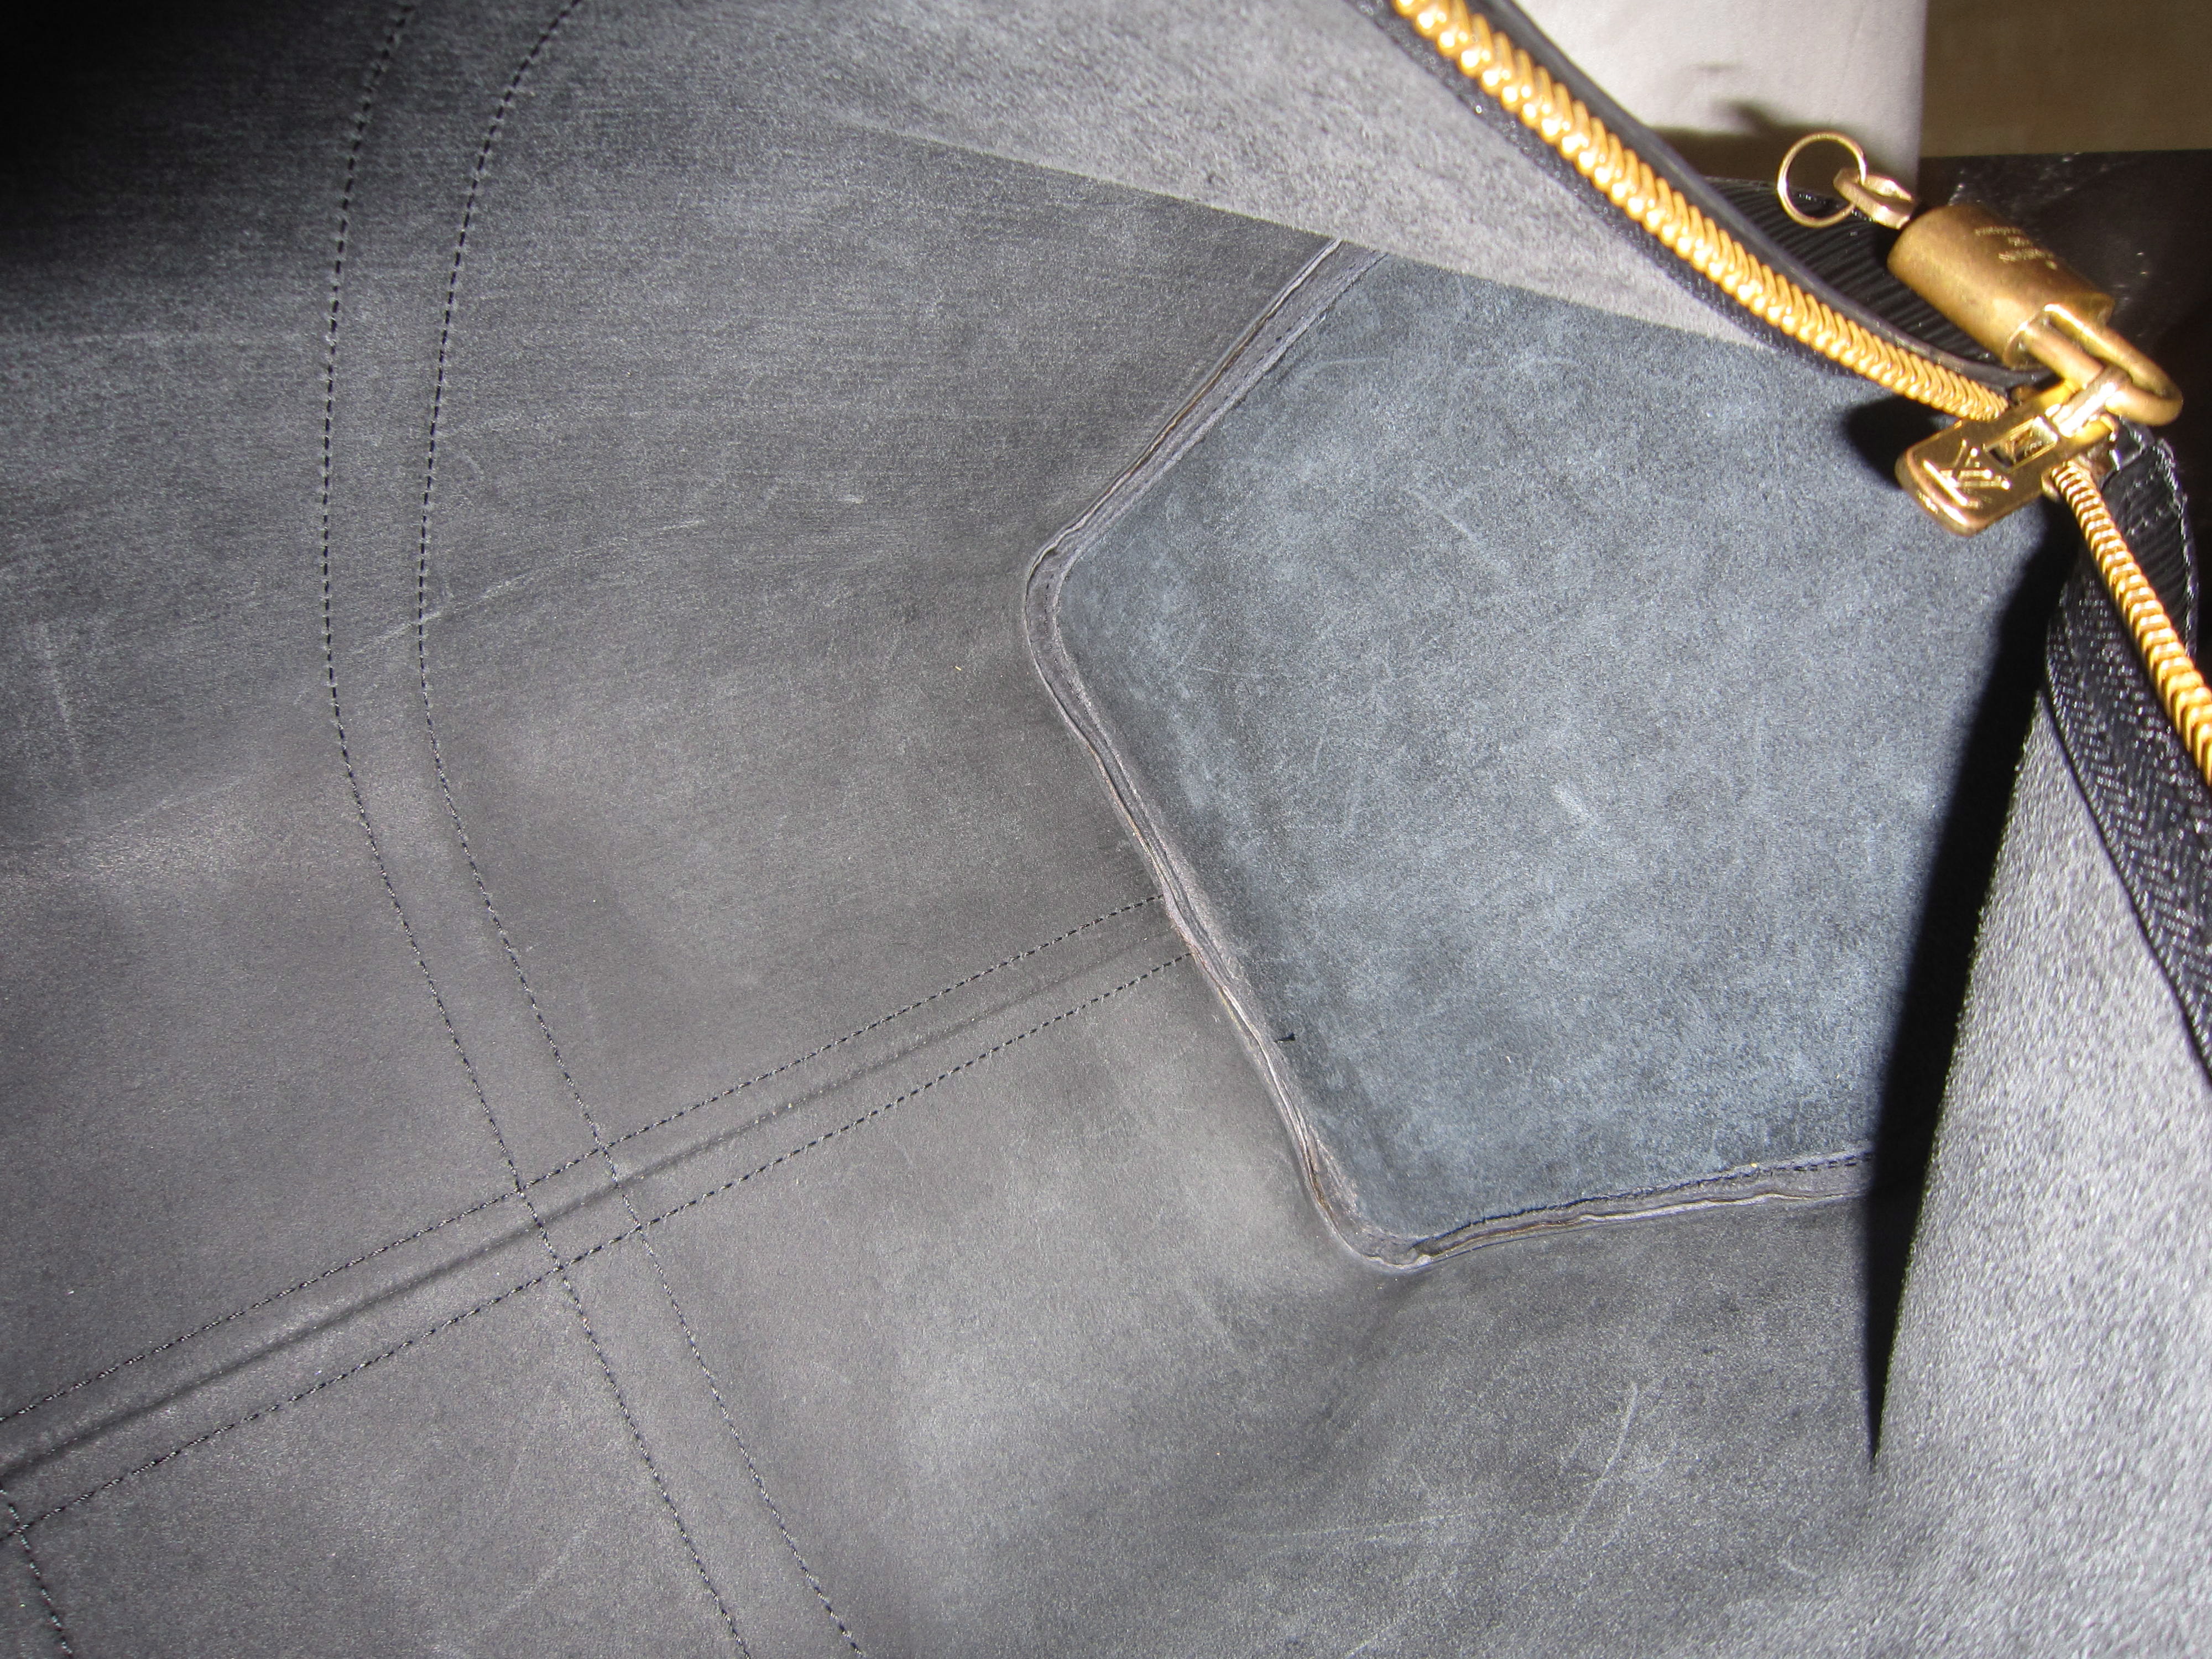 Louis Vuitton Keepall Bag Epi Leather 45 Black 220202177